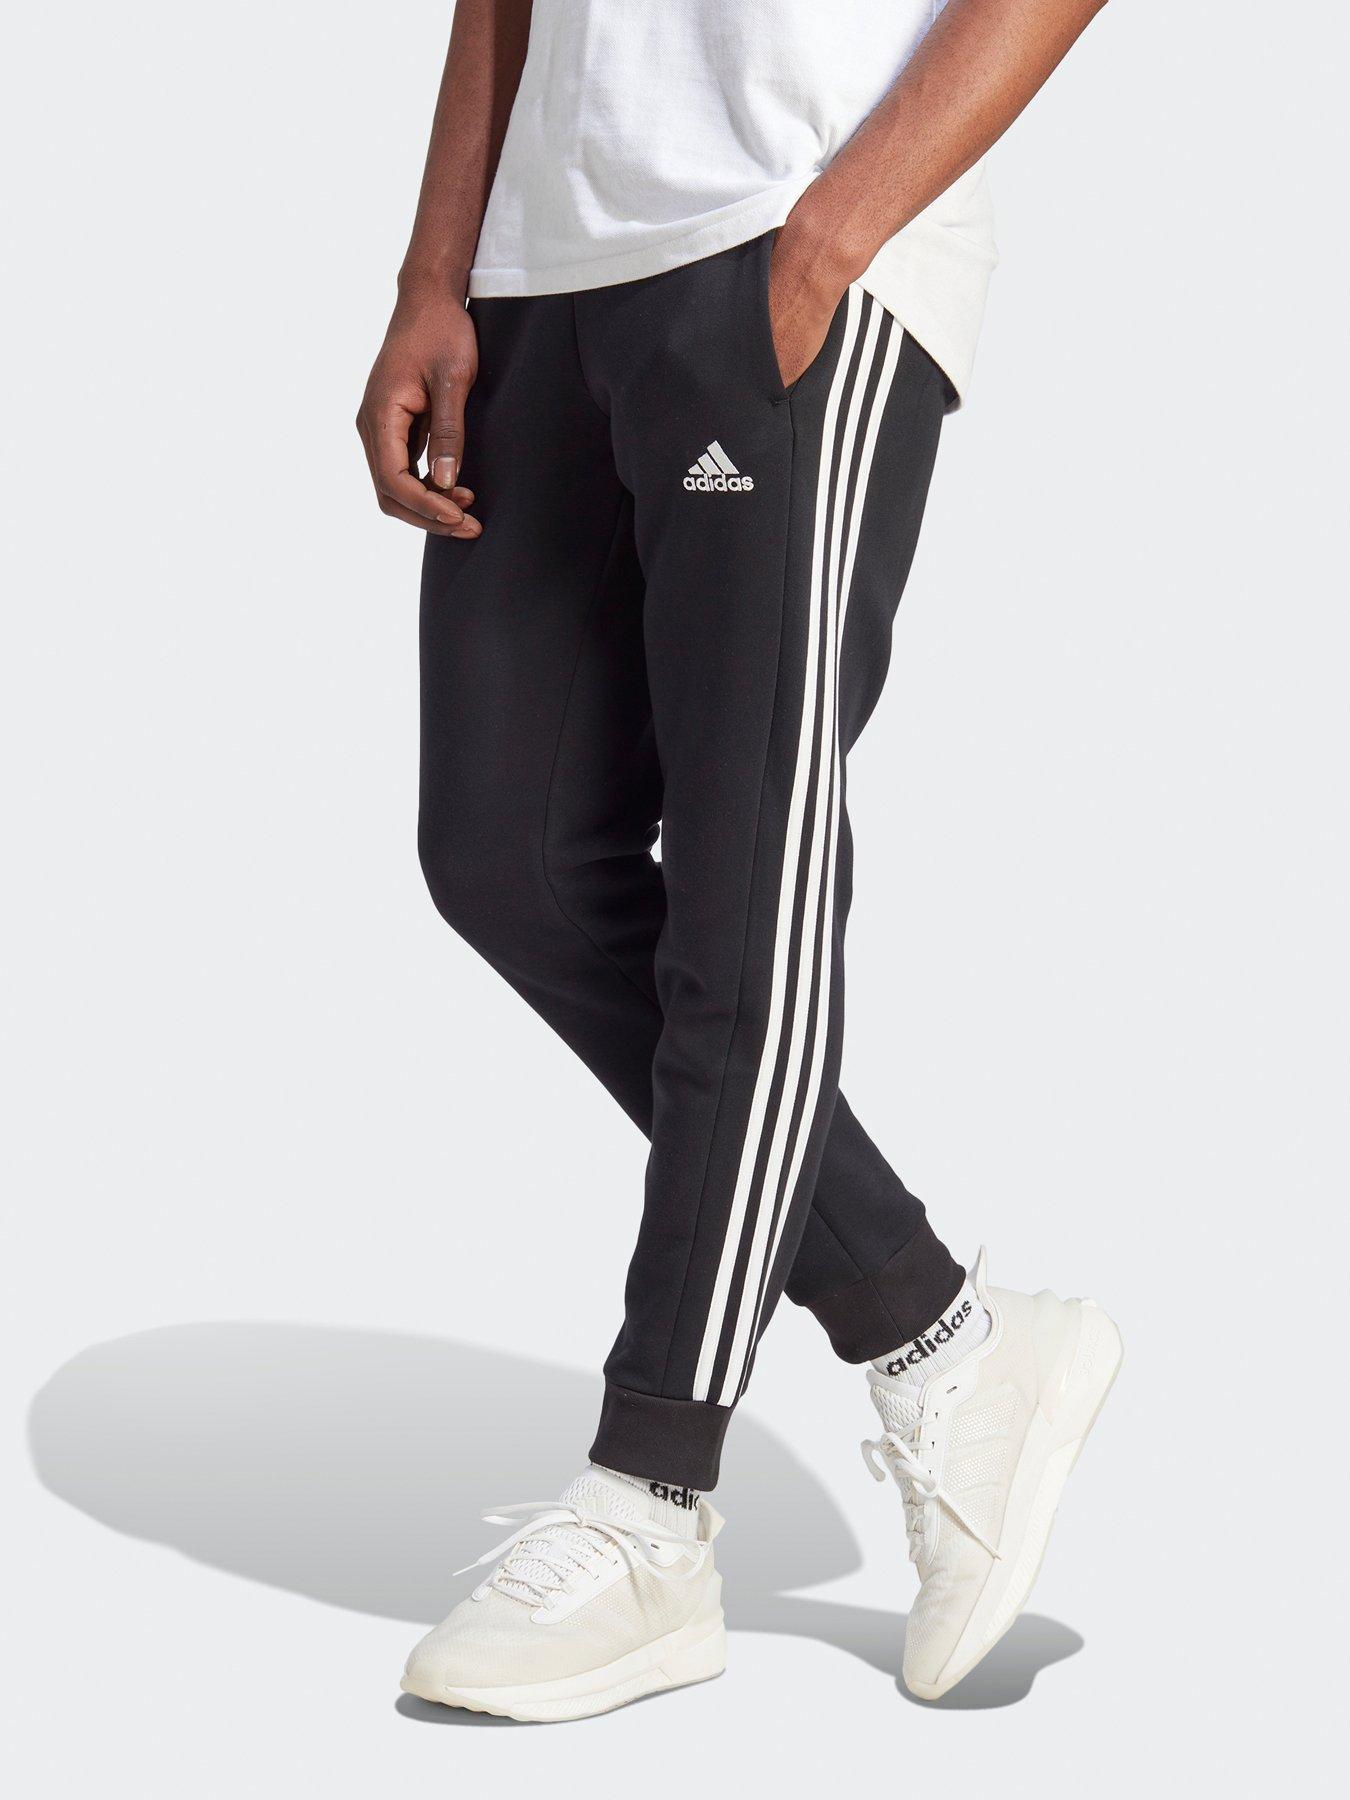 adidas Sportswear Sweatpants Comfy and Chill - Medium Grey Heather